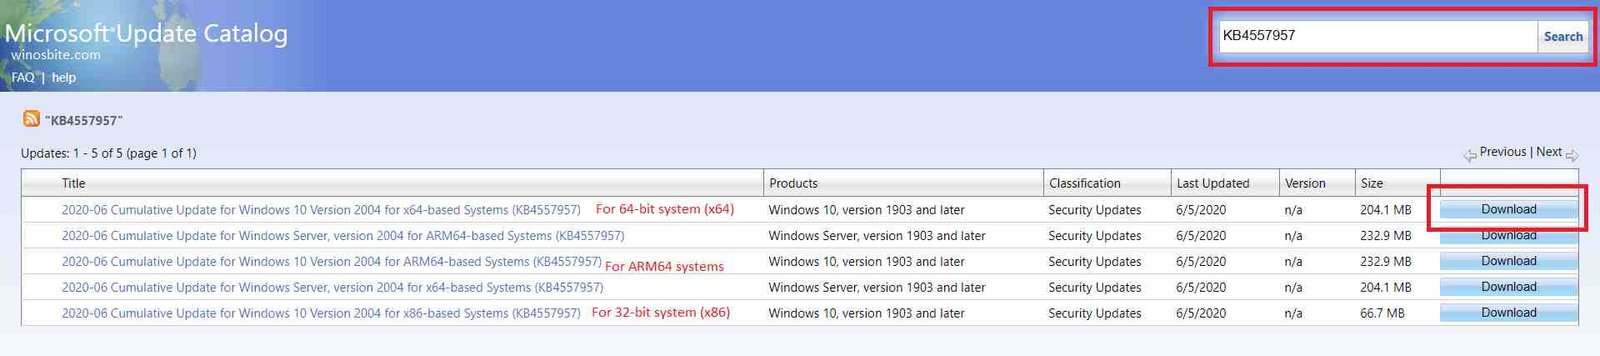 Microsoft update catalog